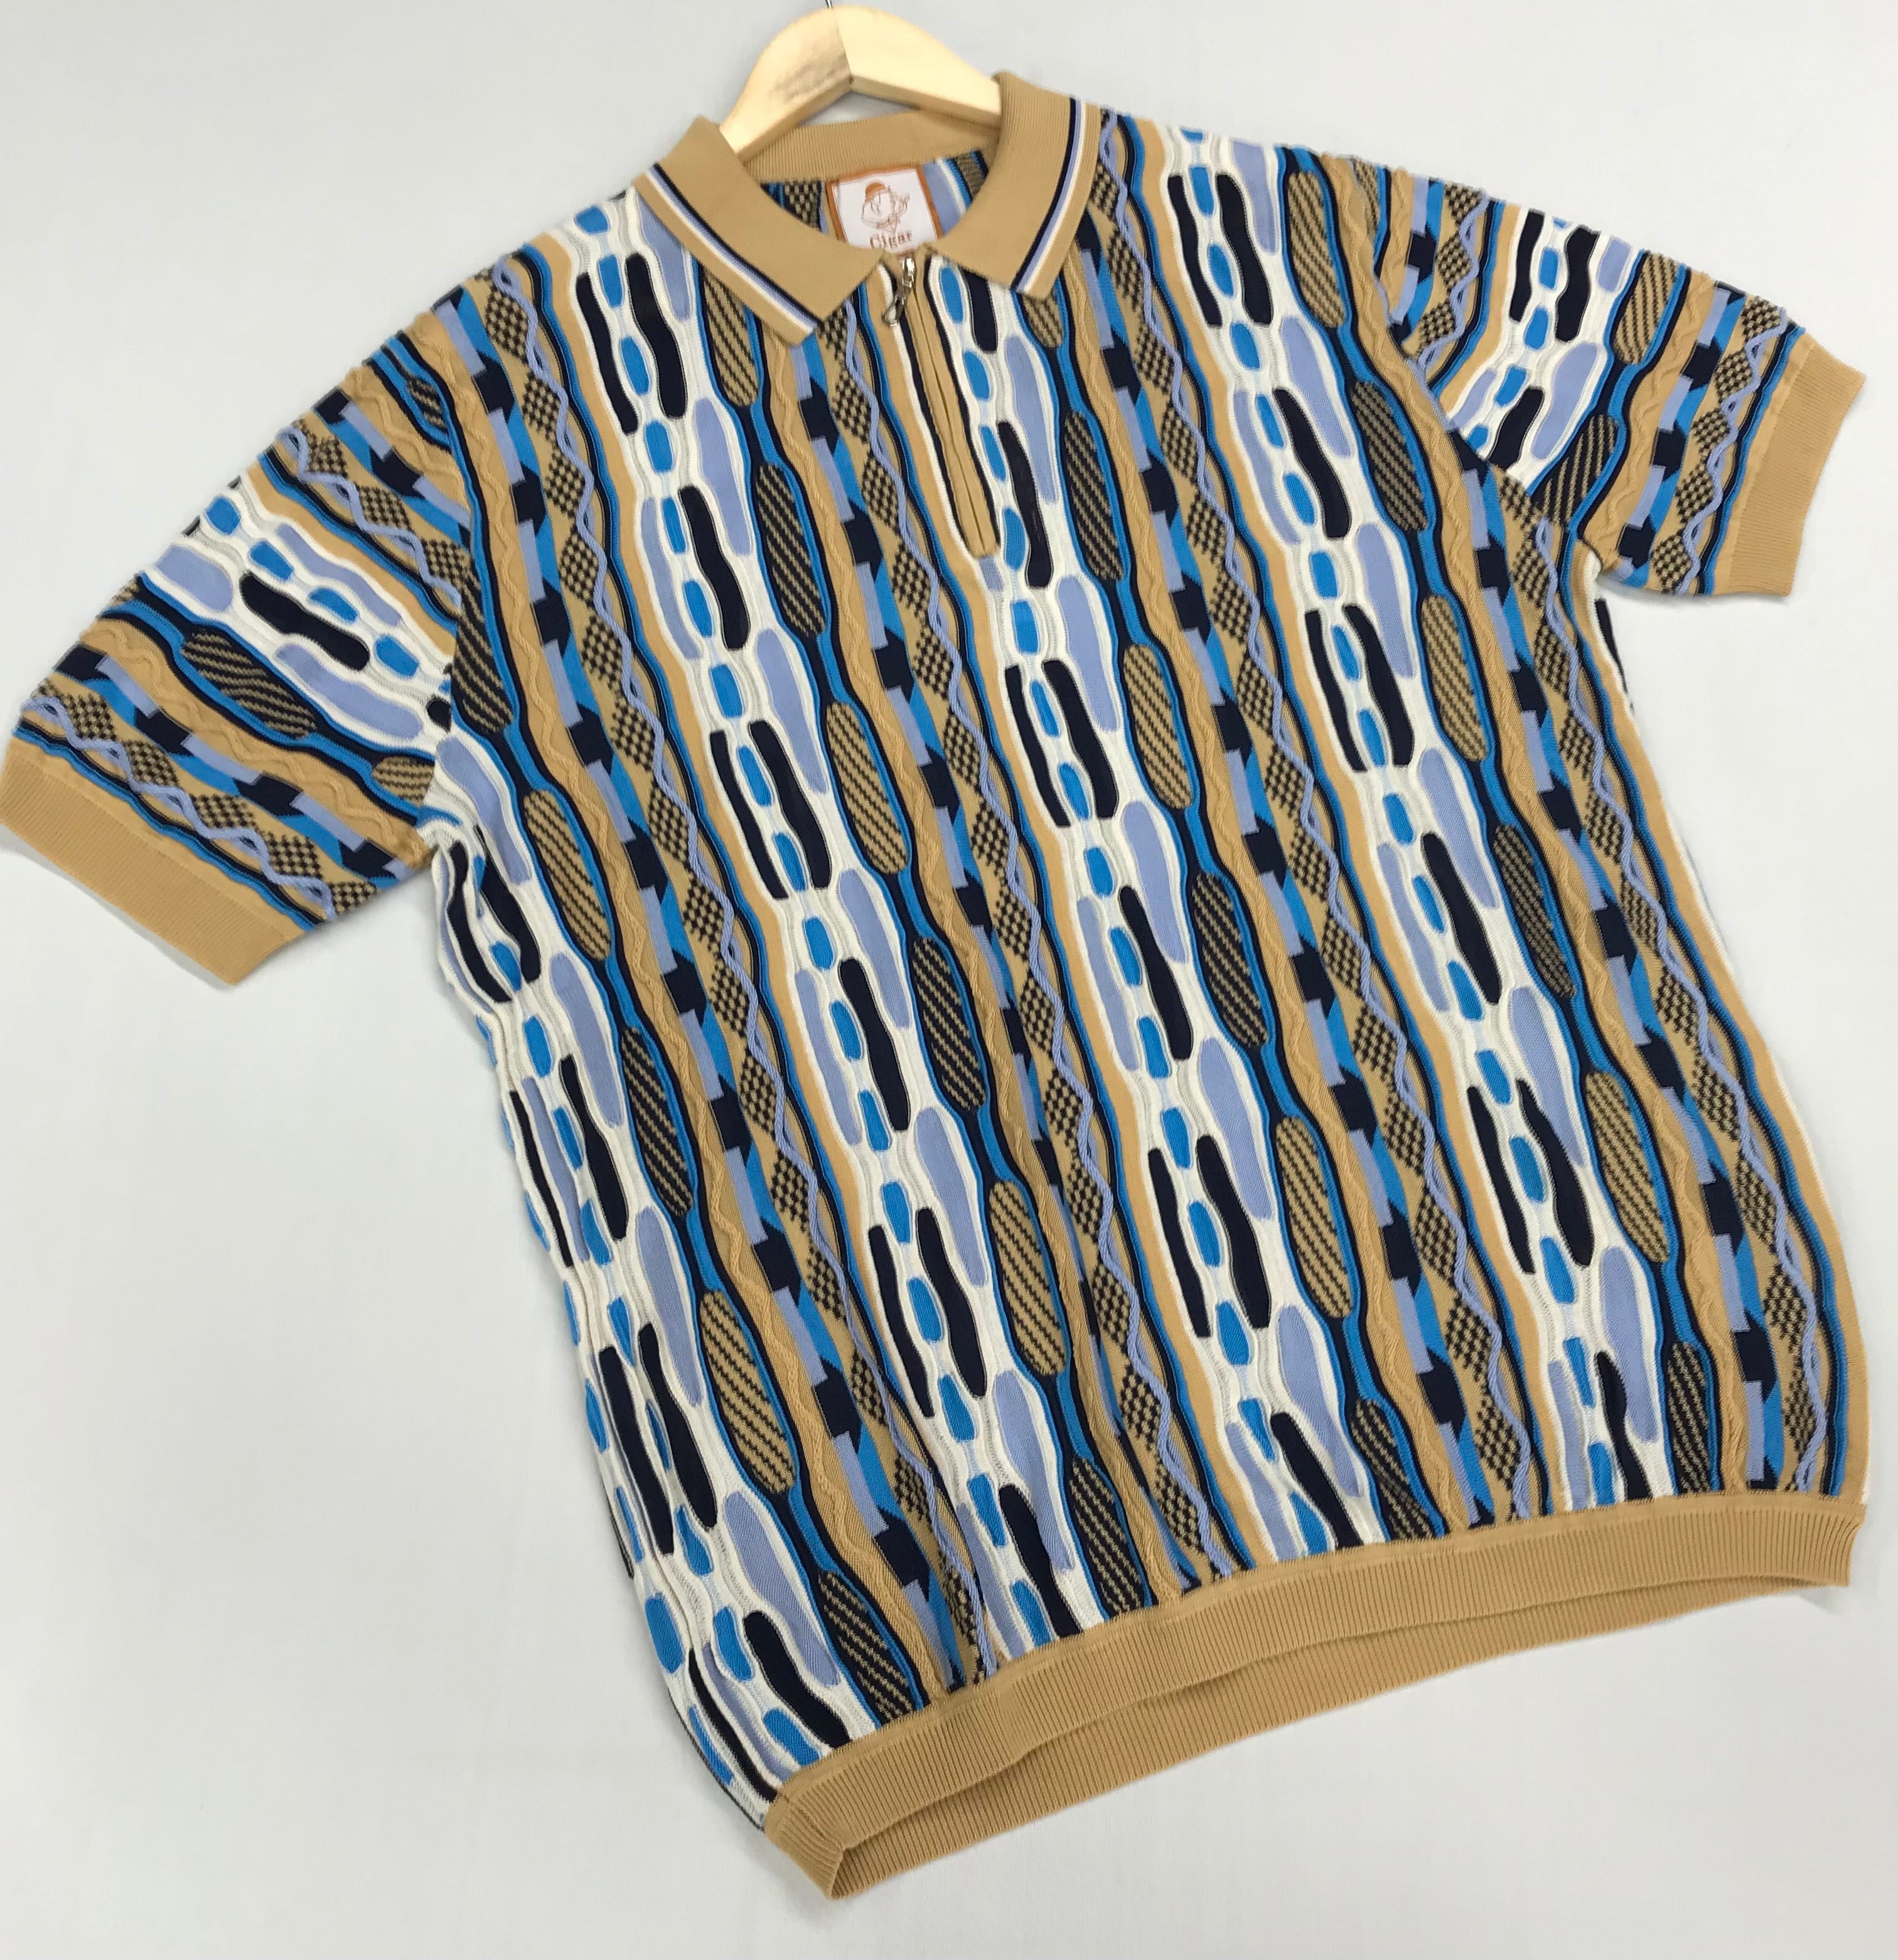 Couture Tan/Blue/White Short Sleeve Shirt